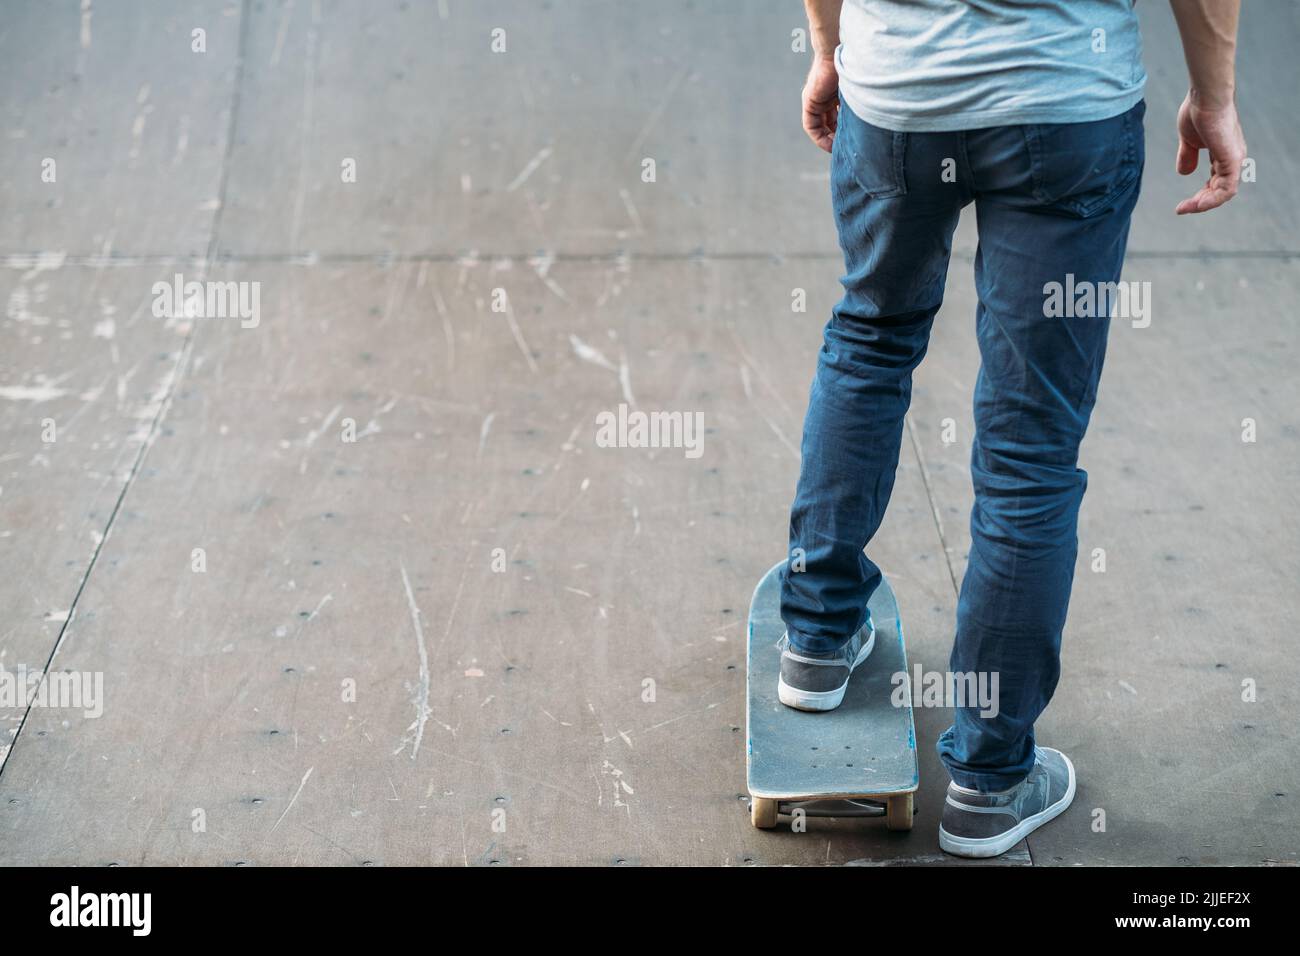 youth lifestyle leisure practice man skateboard Stock Photo